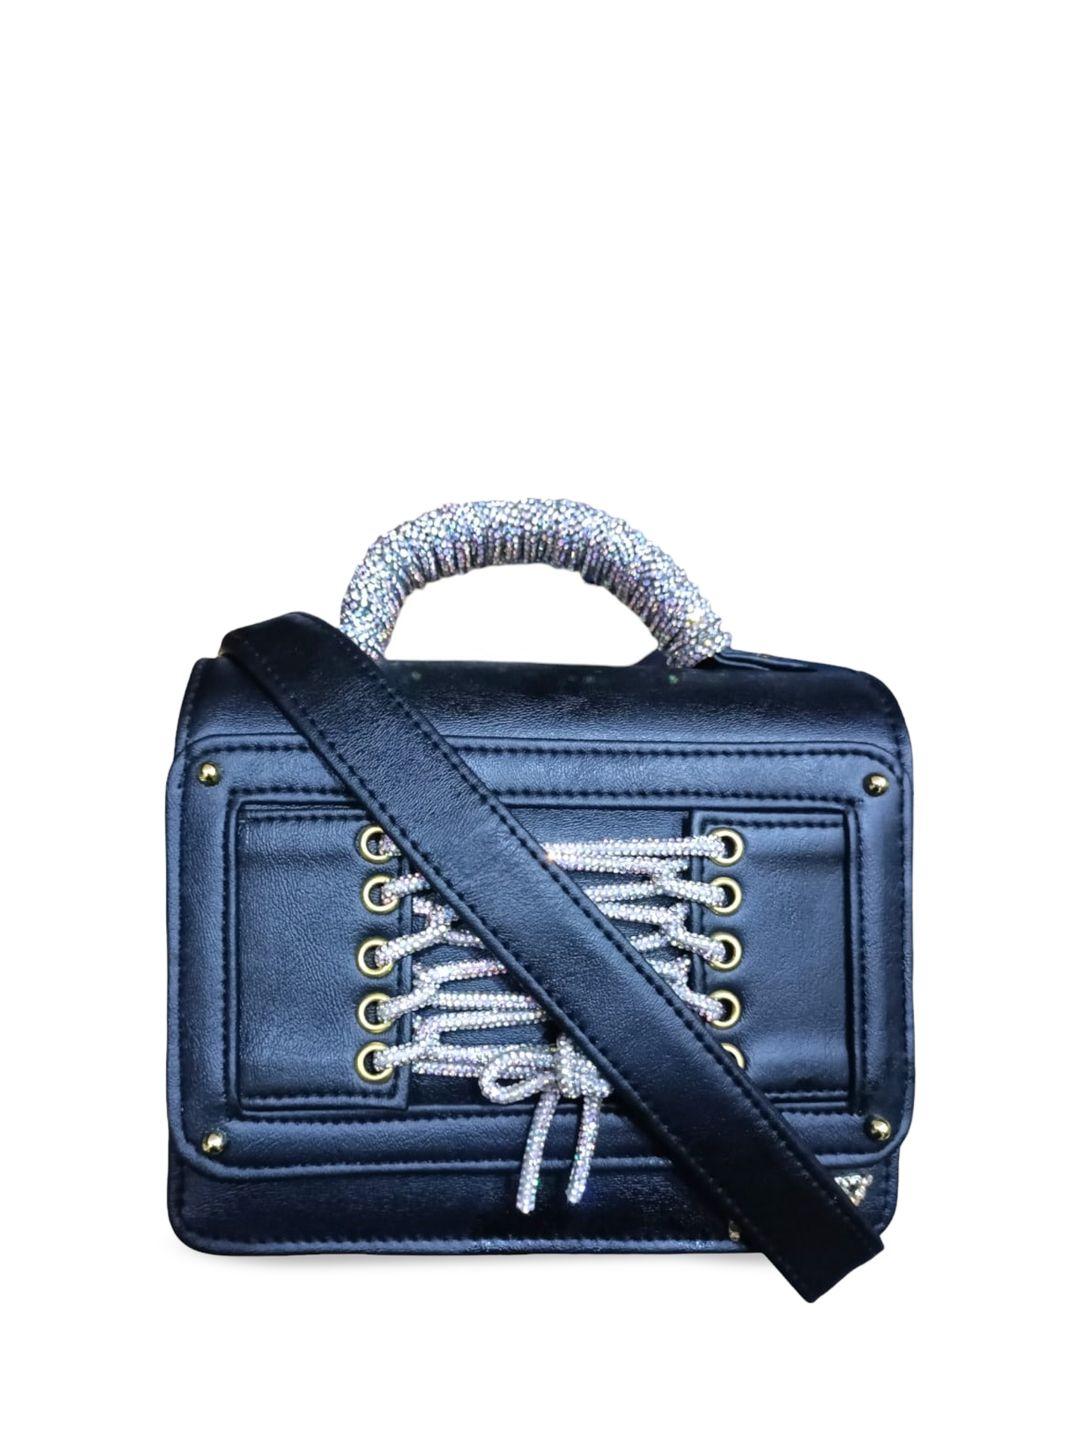 vdesi rhinestone embellished structured handheld bag